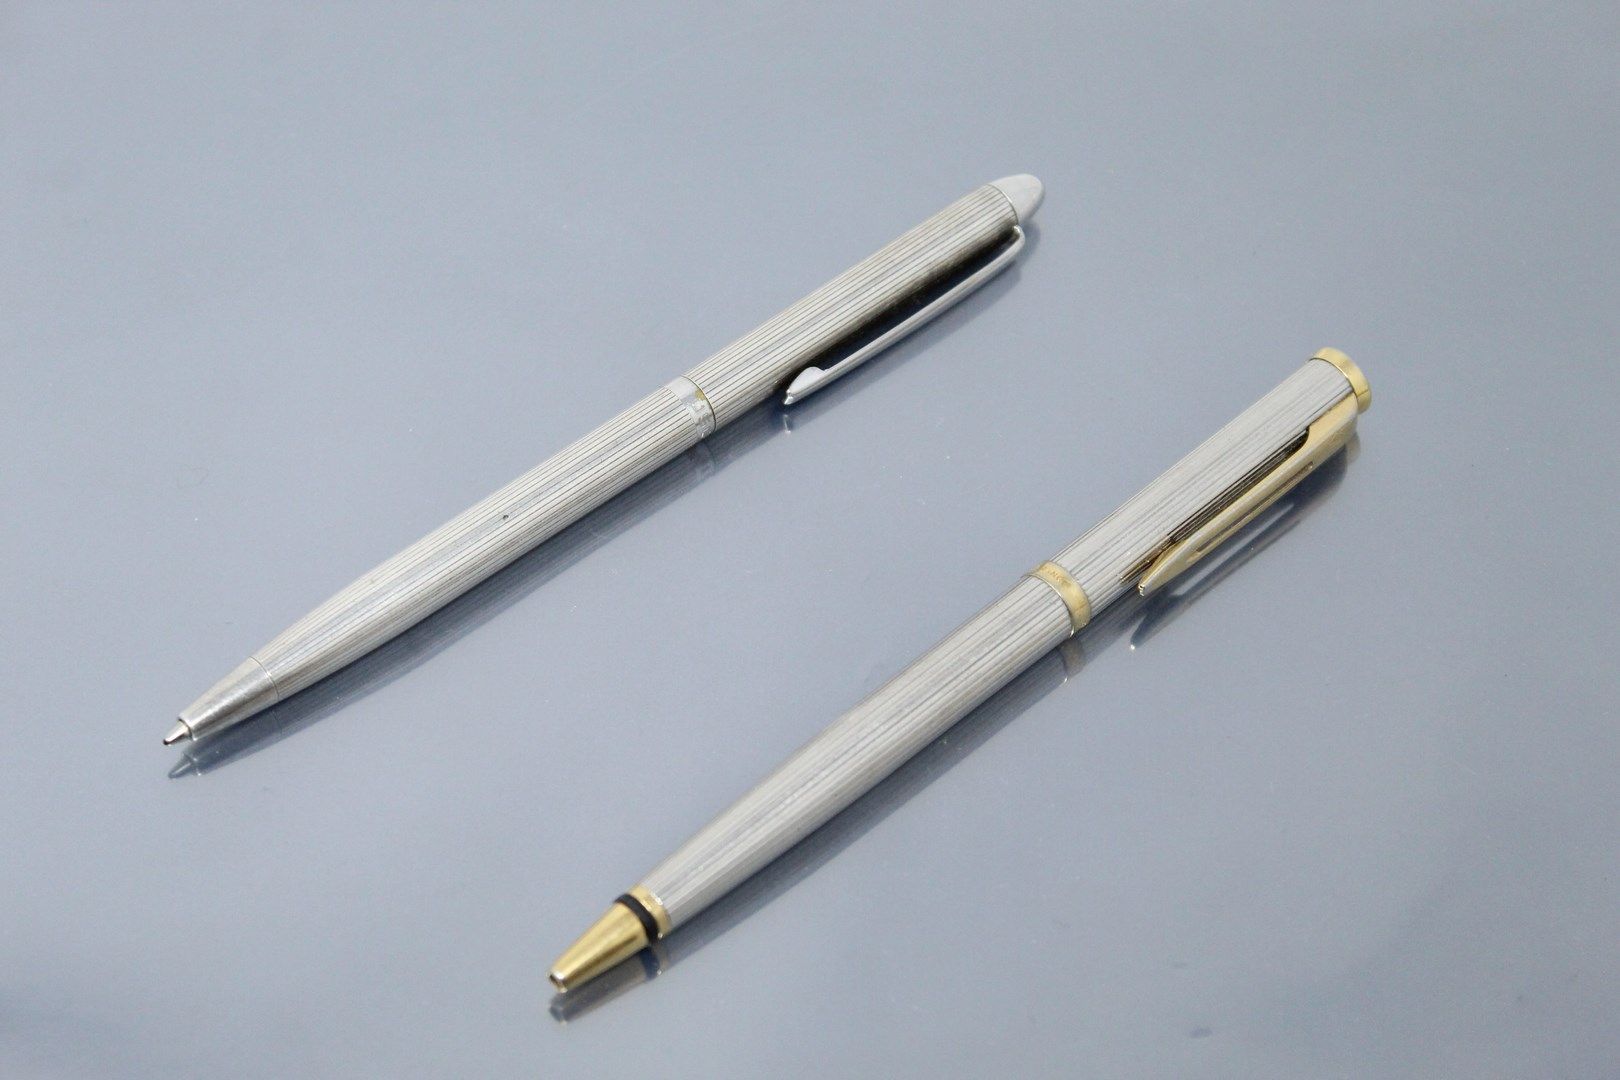 Null 一套两支笔，一支银质笔，署名 "USUS"，另一支金属和鎏金笔，署名 "WATERMAN"。

银器的毛重：24.23克。